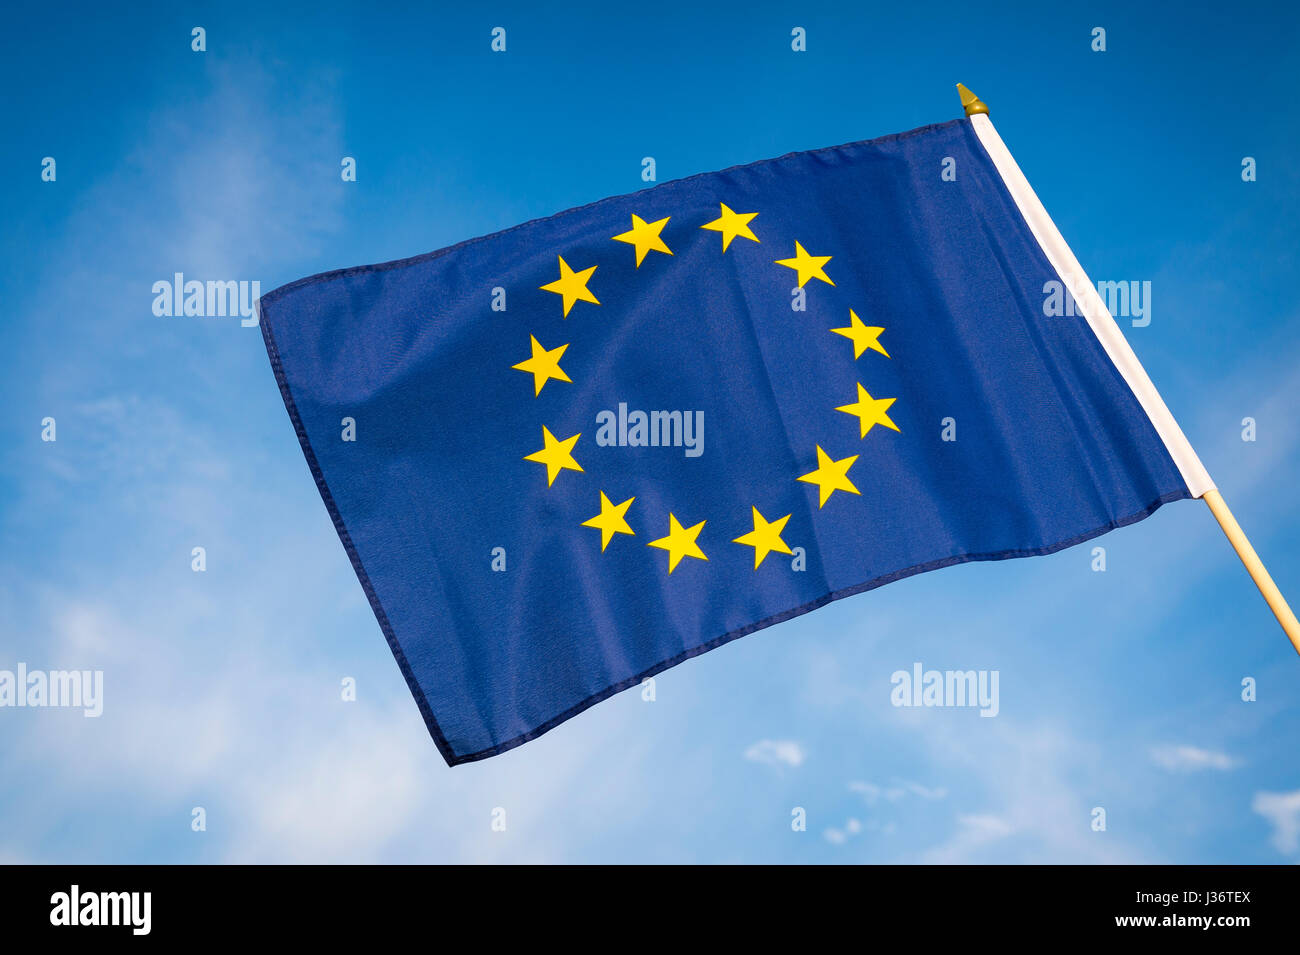 EU European Union flag flying outdoors in bright blue sky Stock Photo